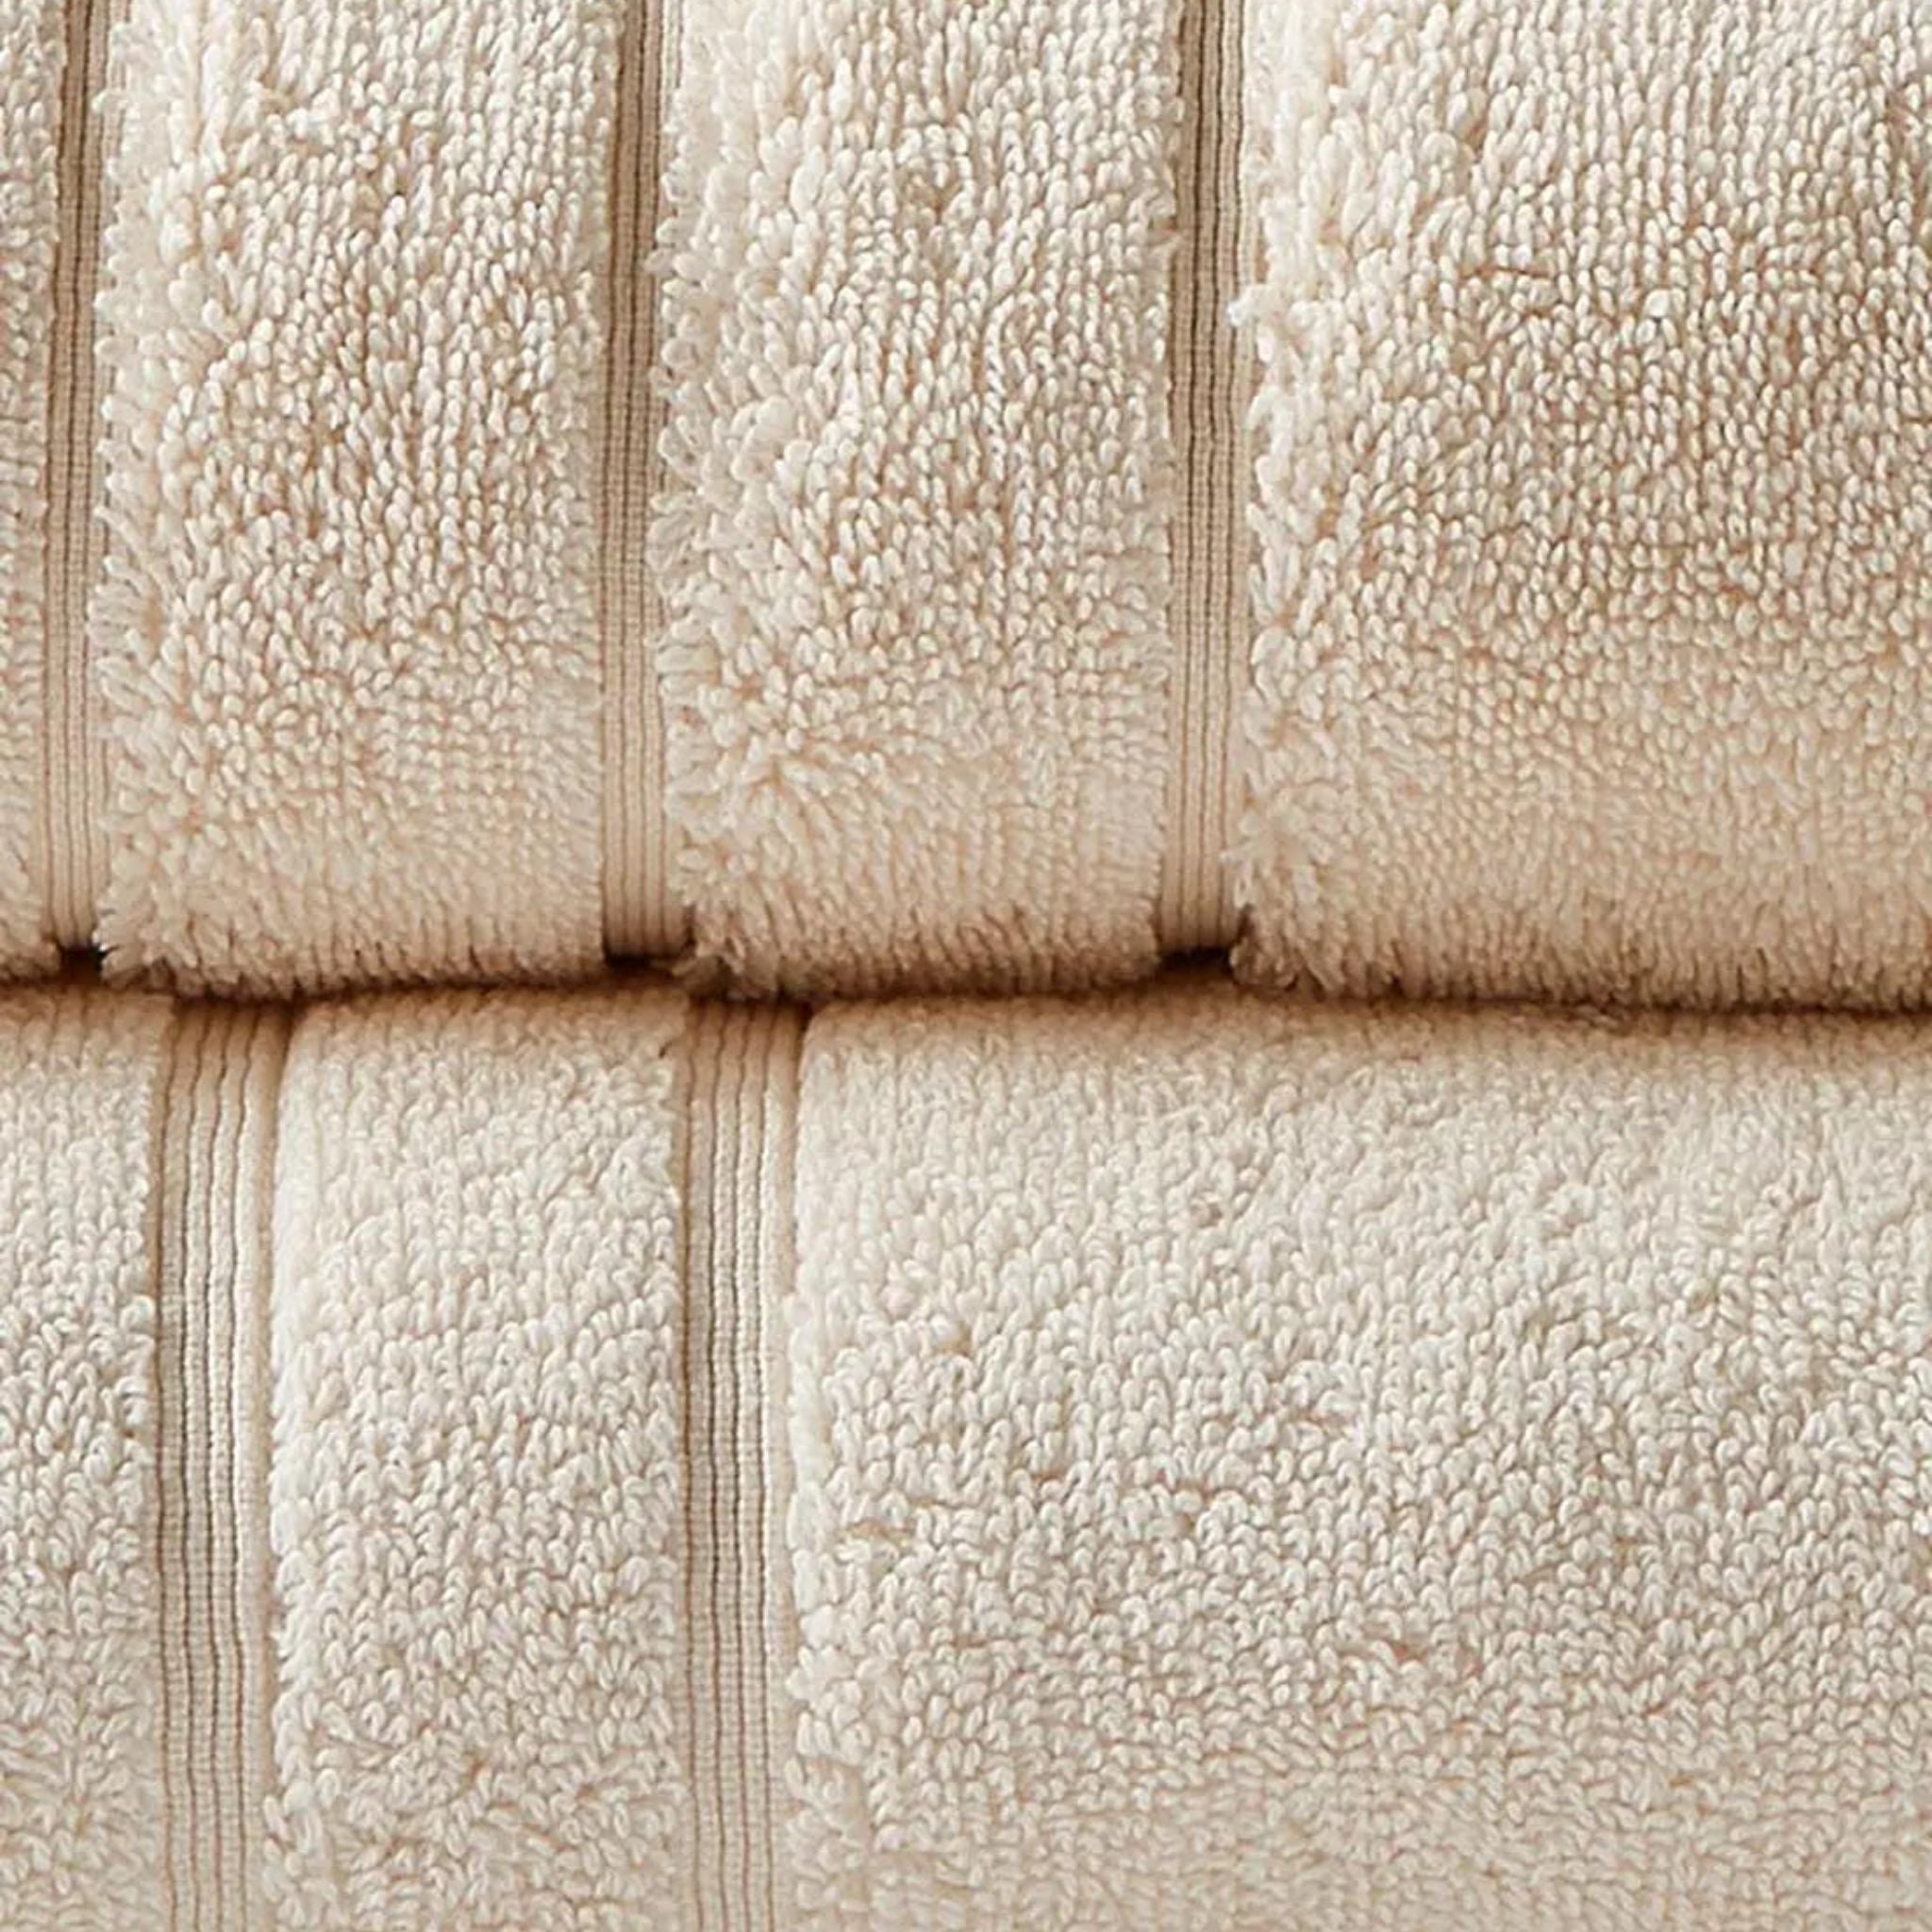 Luxury Bath Towels (Set of 2) – Thomas Lee Sheets